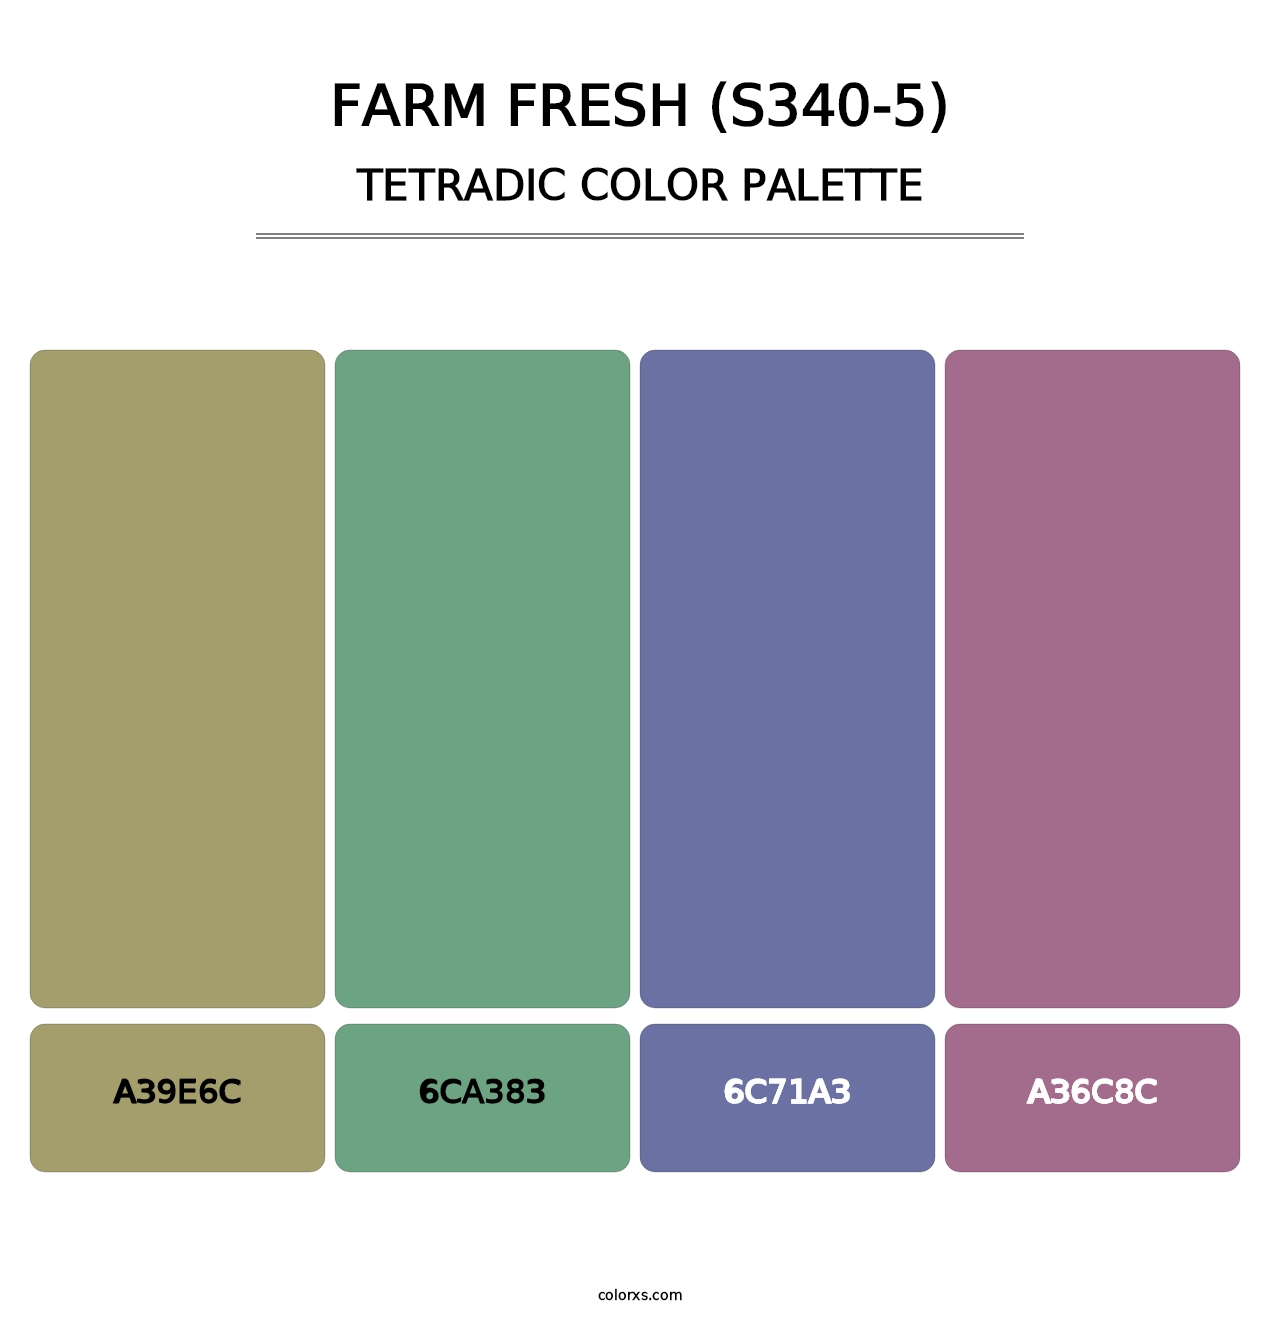 Farm Fresh (S340-5) - Tetradic Color Palette